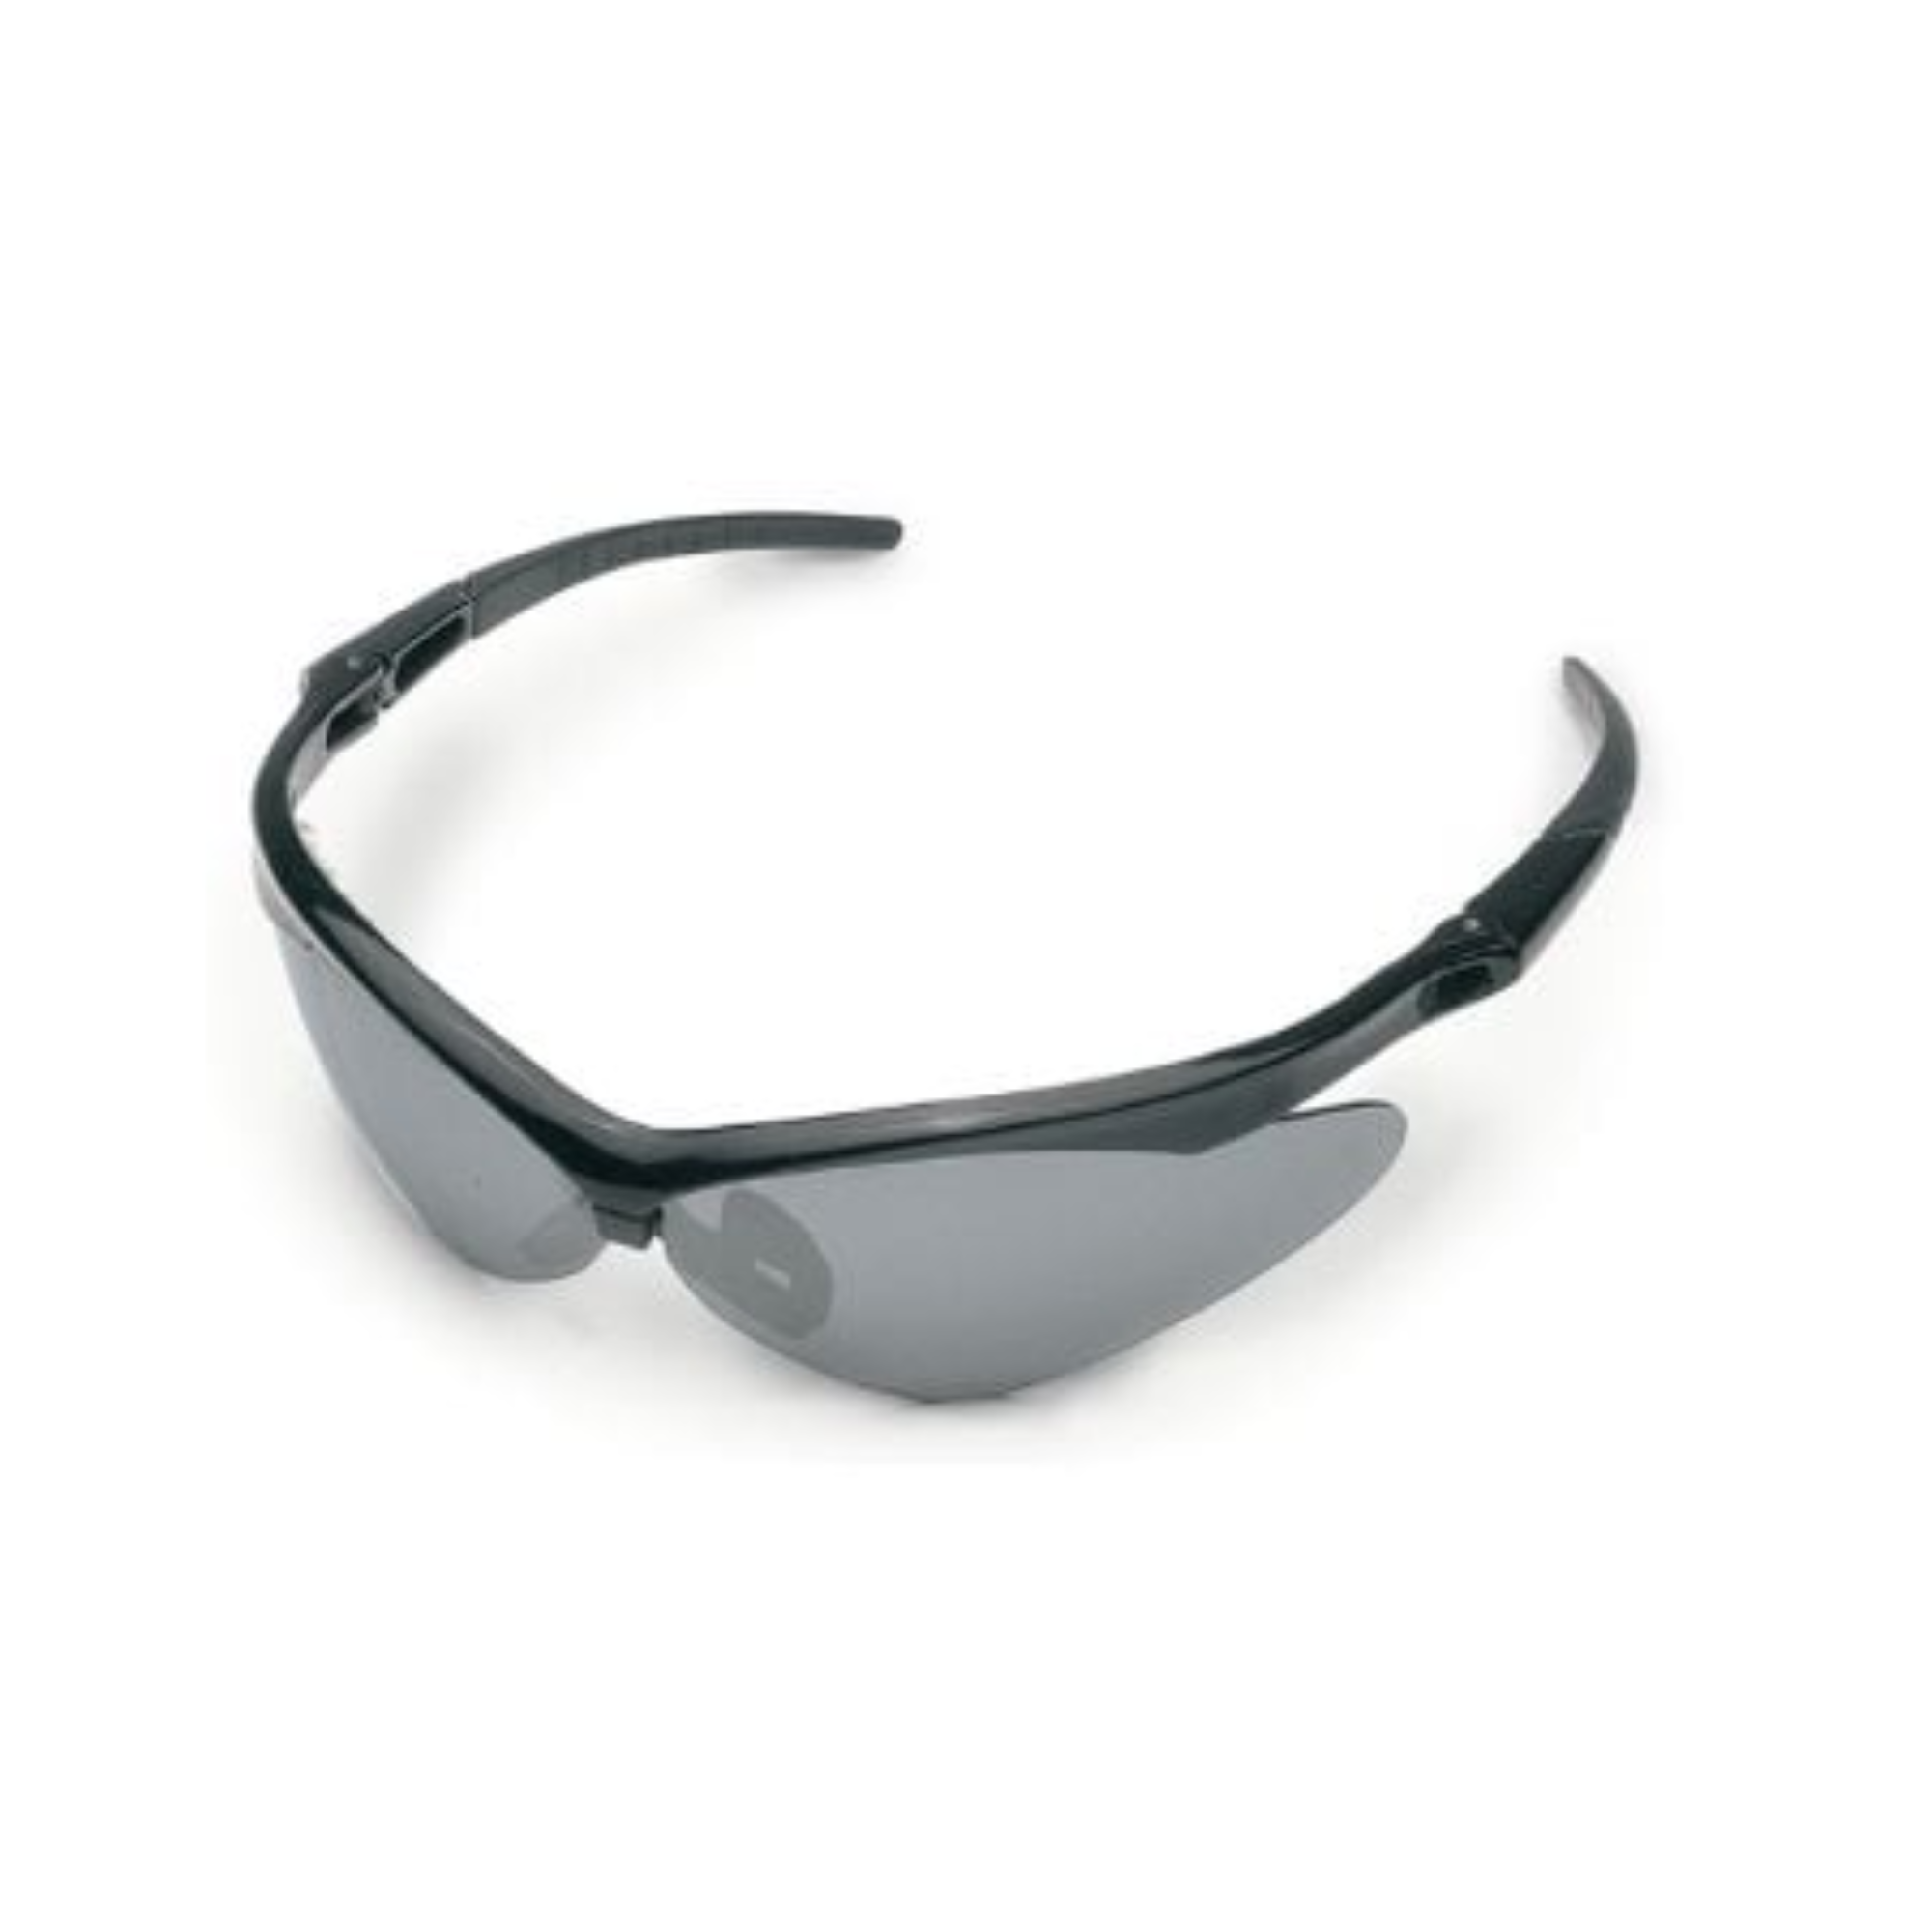 Stihl Black Widow Glasses | 7010 884 0301